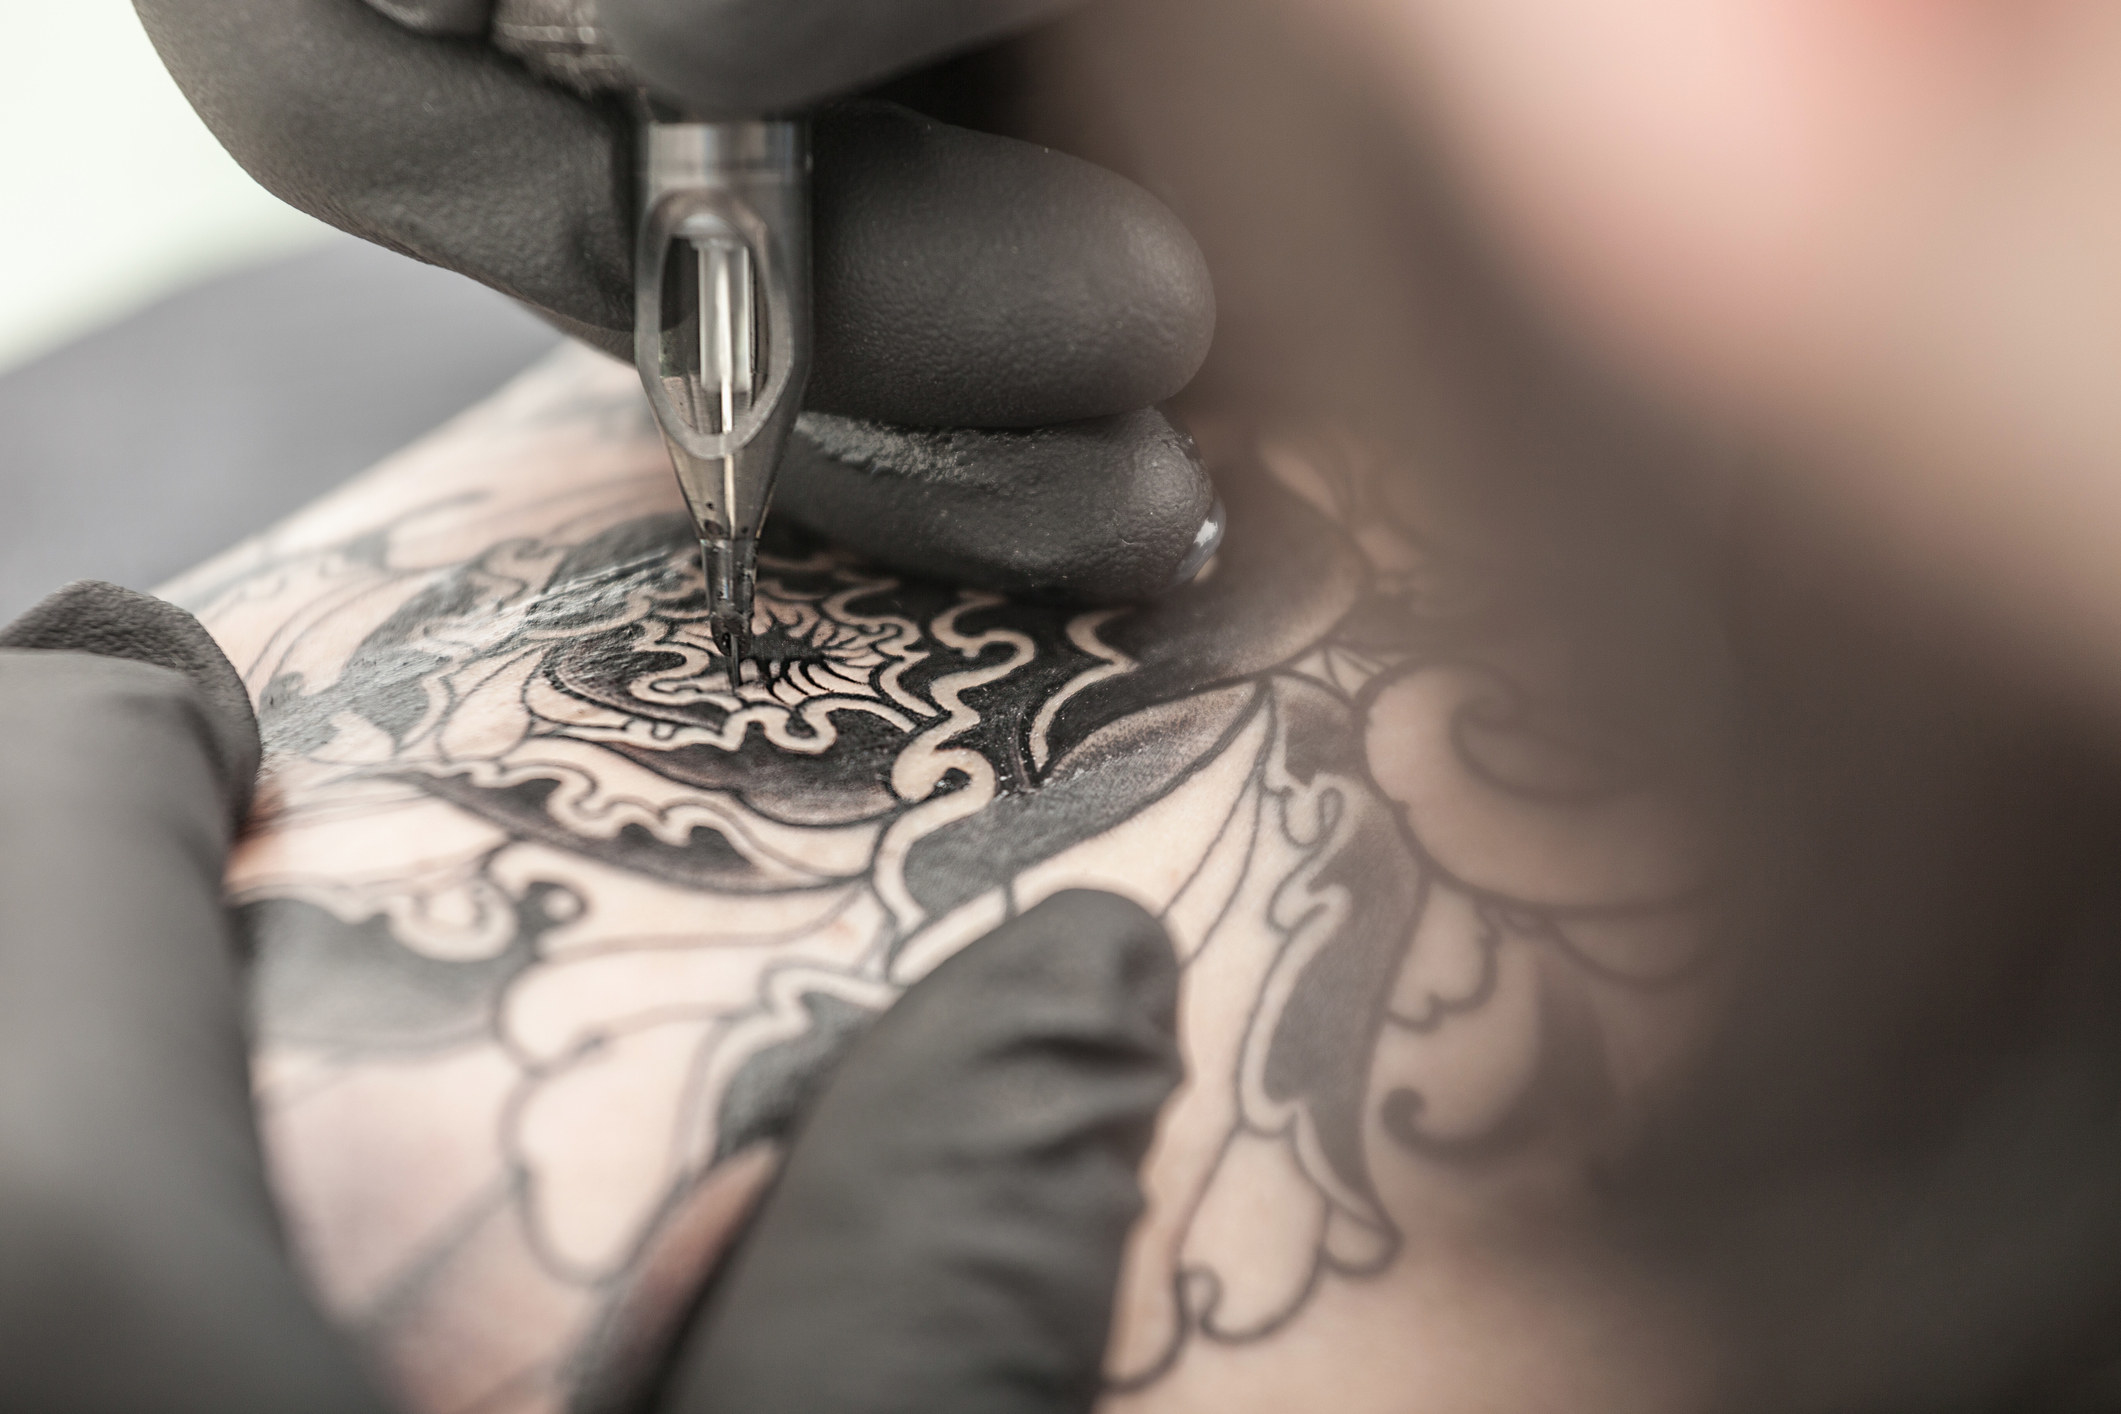 a tattoo being drawn